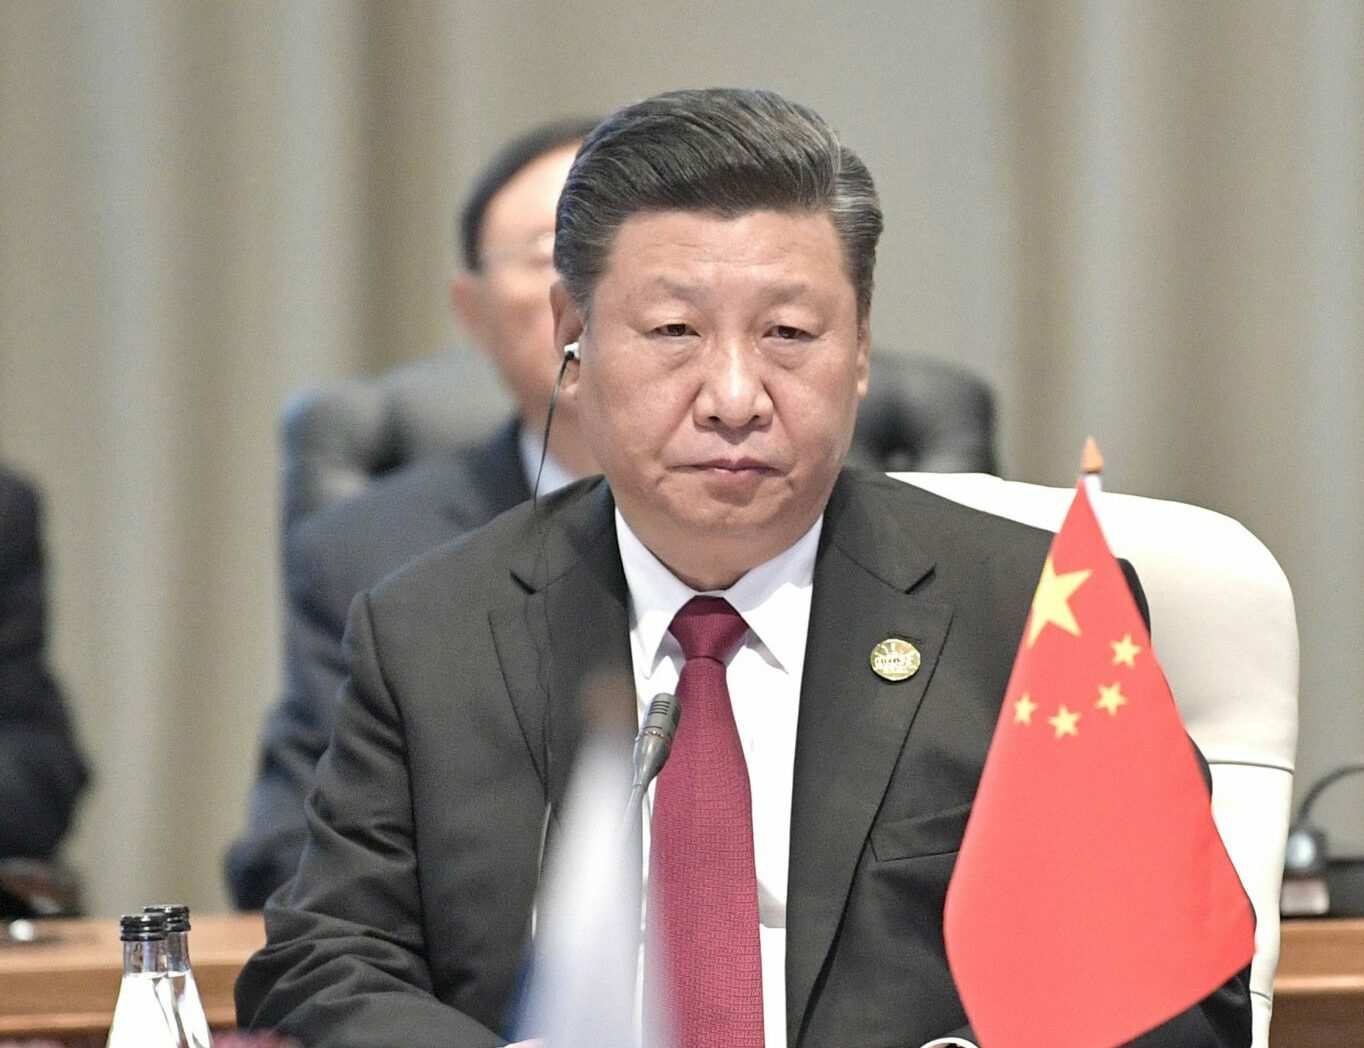 Li Keqiang's death fueling distrust, opposition toward Xi Jinping: experts